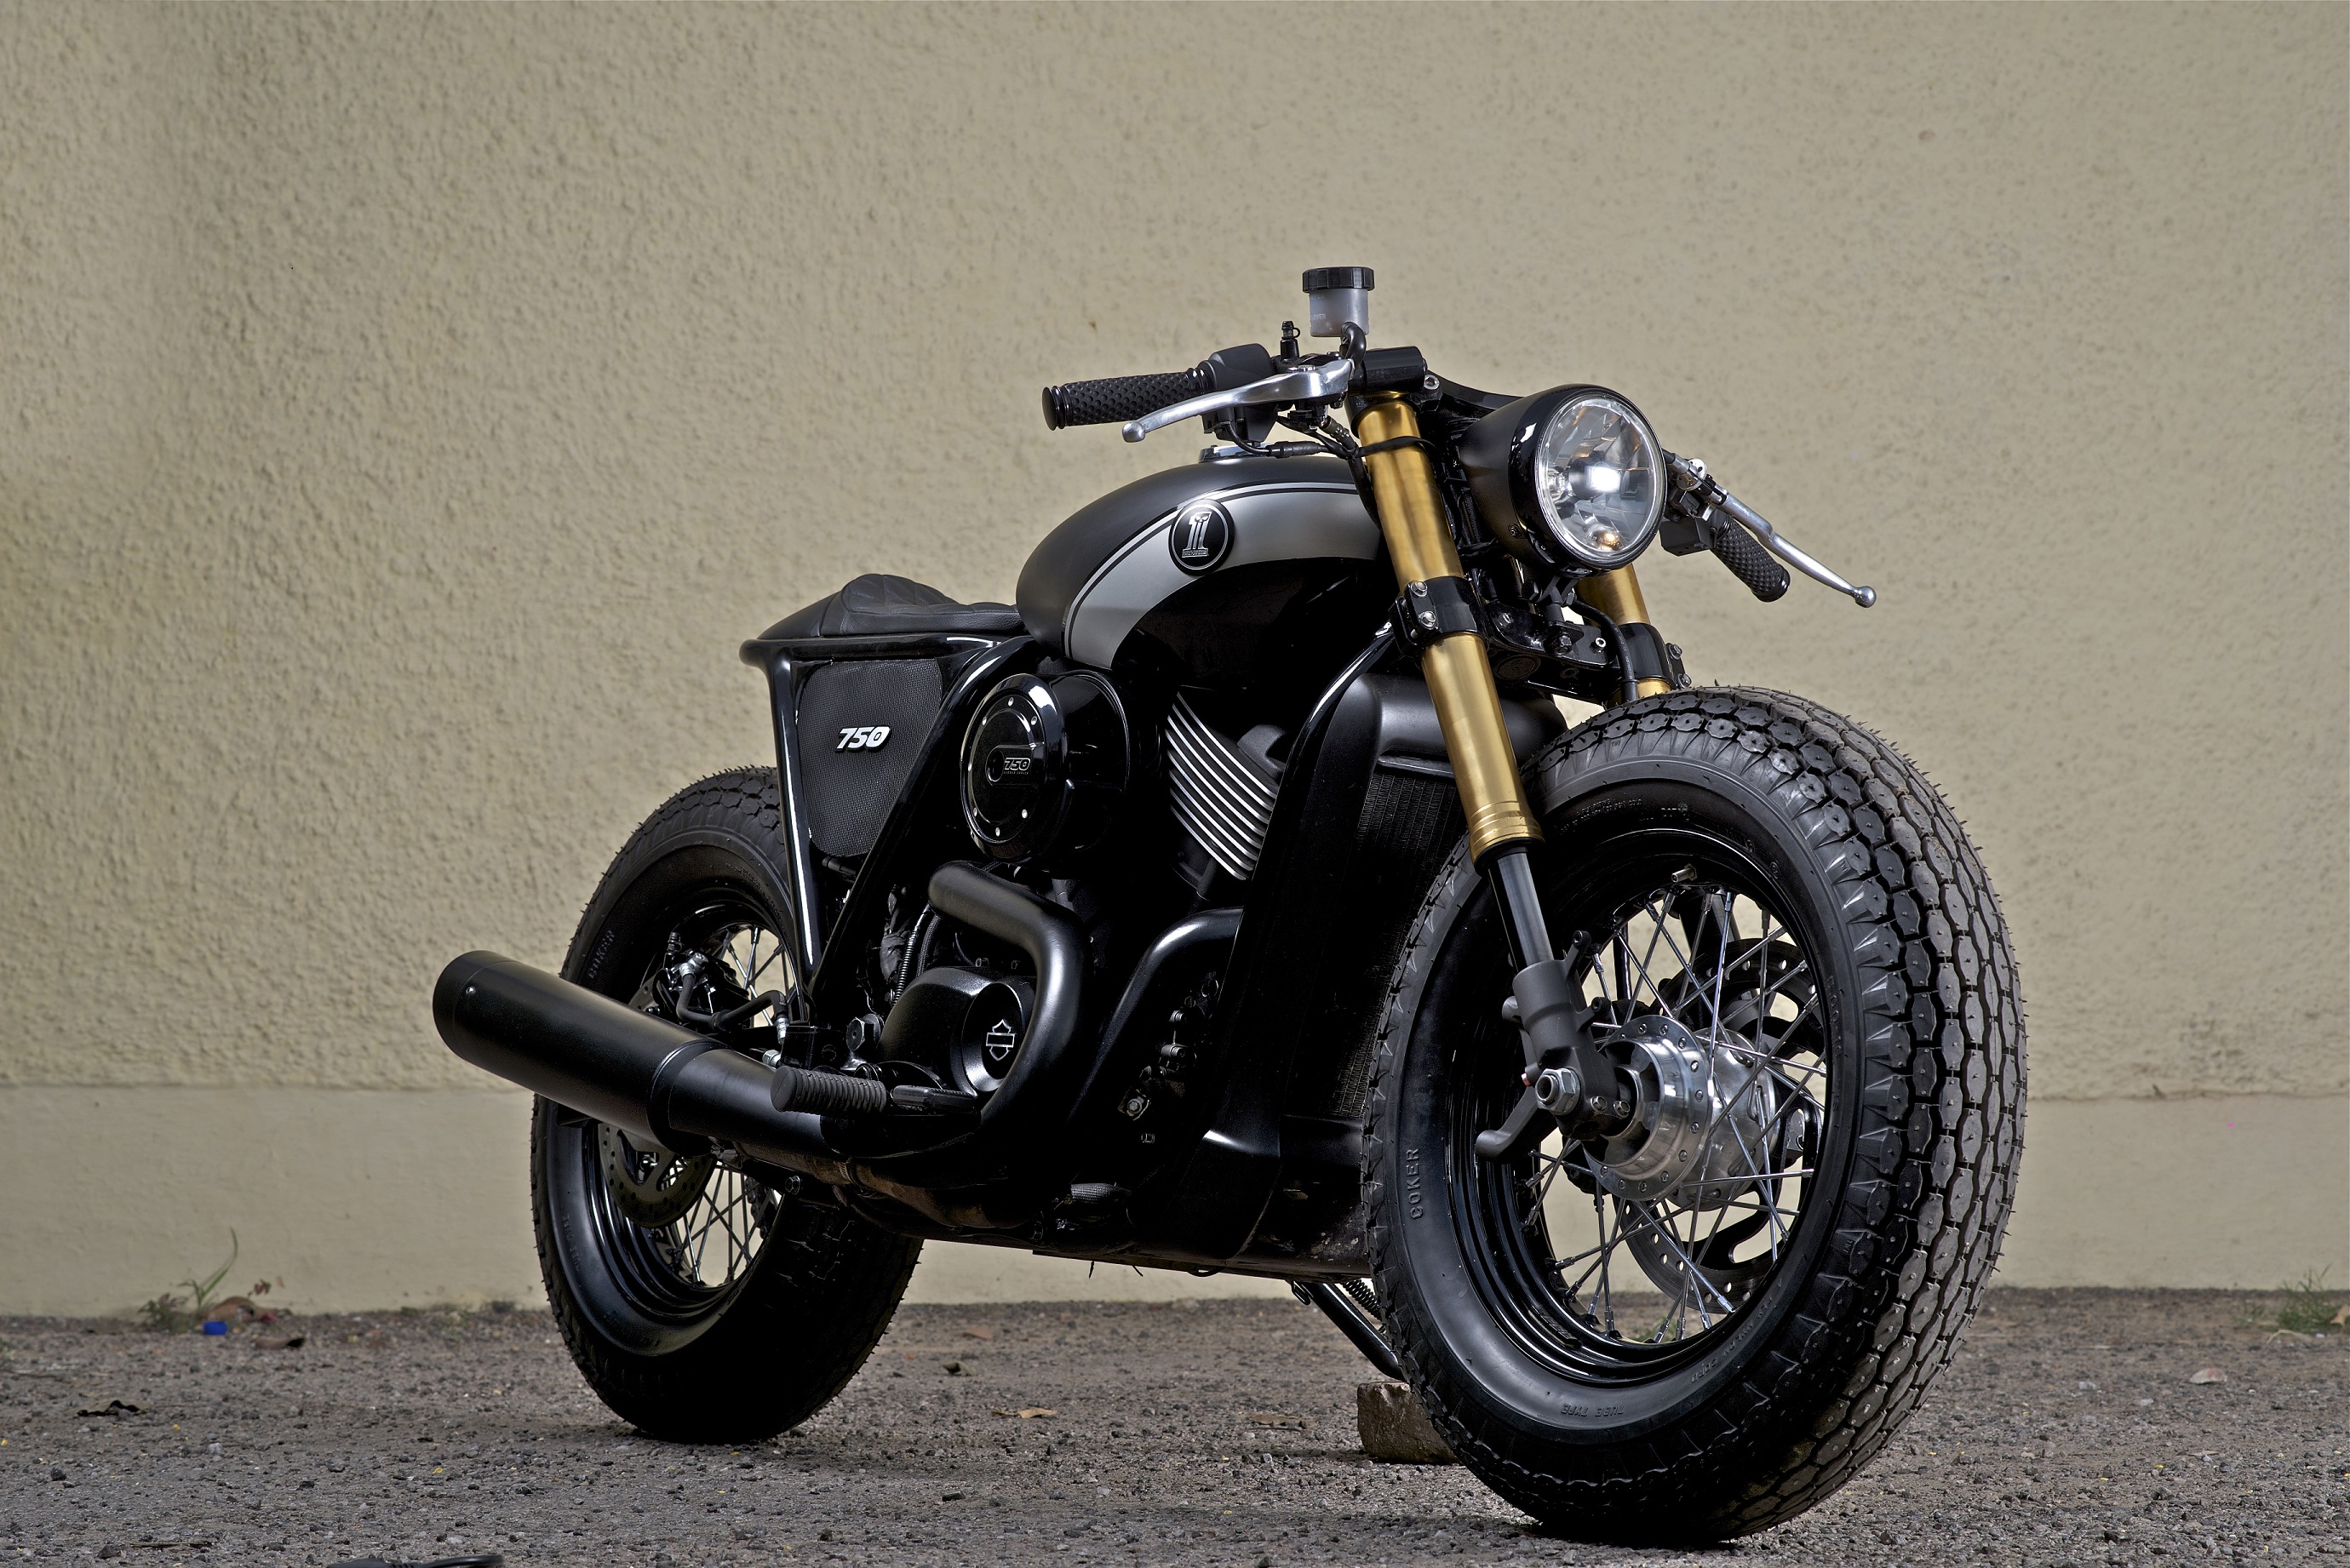 Harley Davidson To Unveil Custom Cafe Racer At Ibw 2015